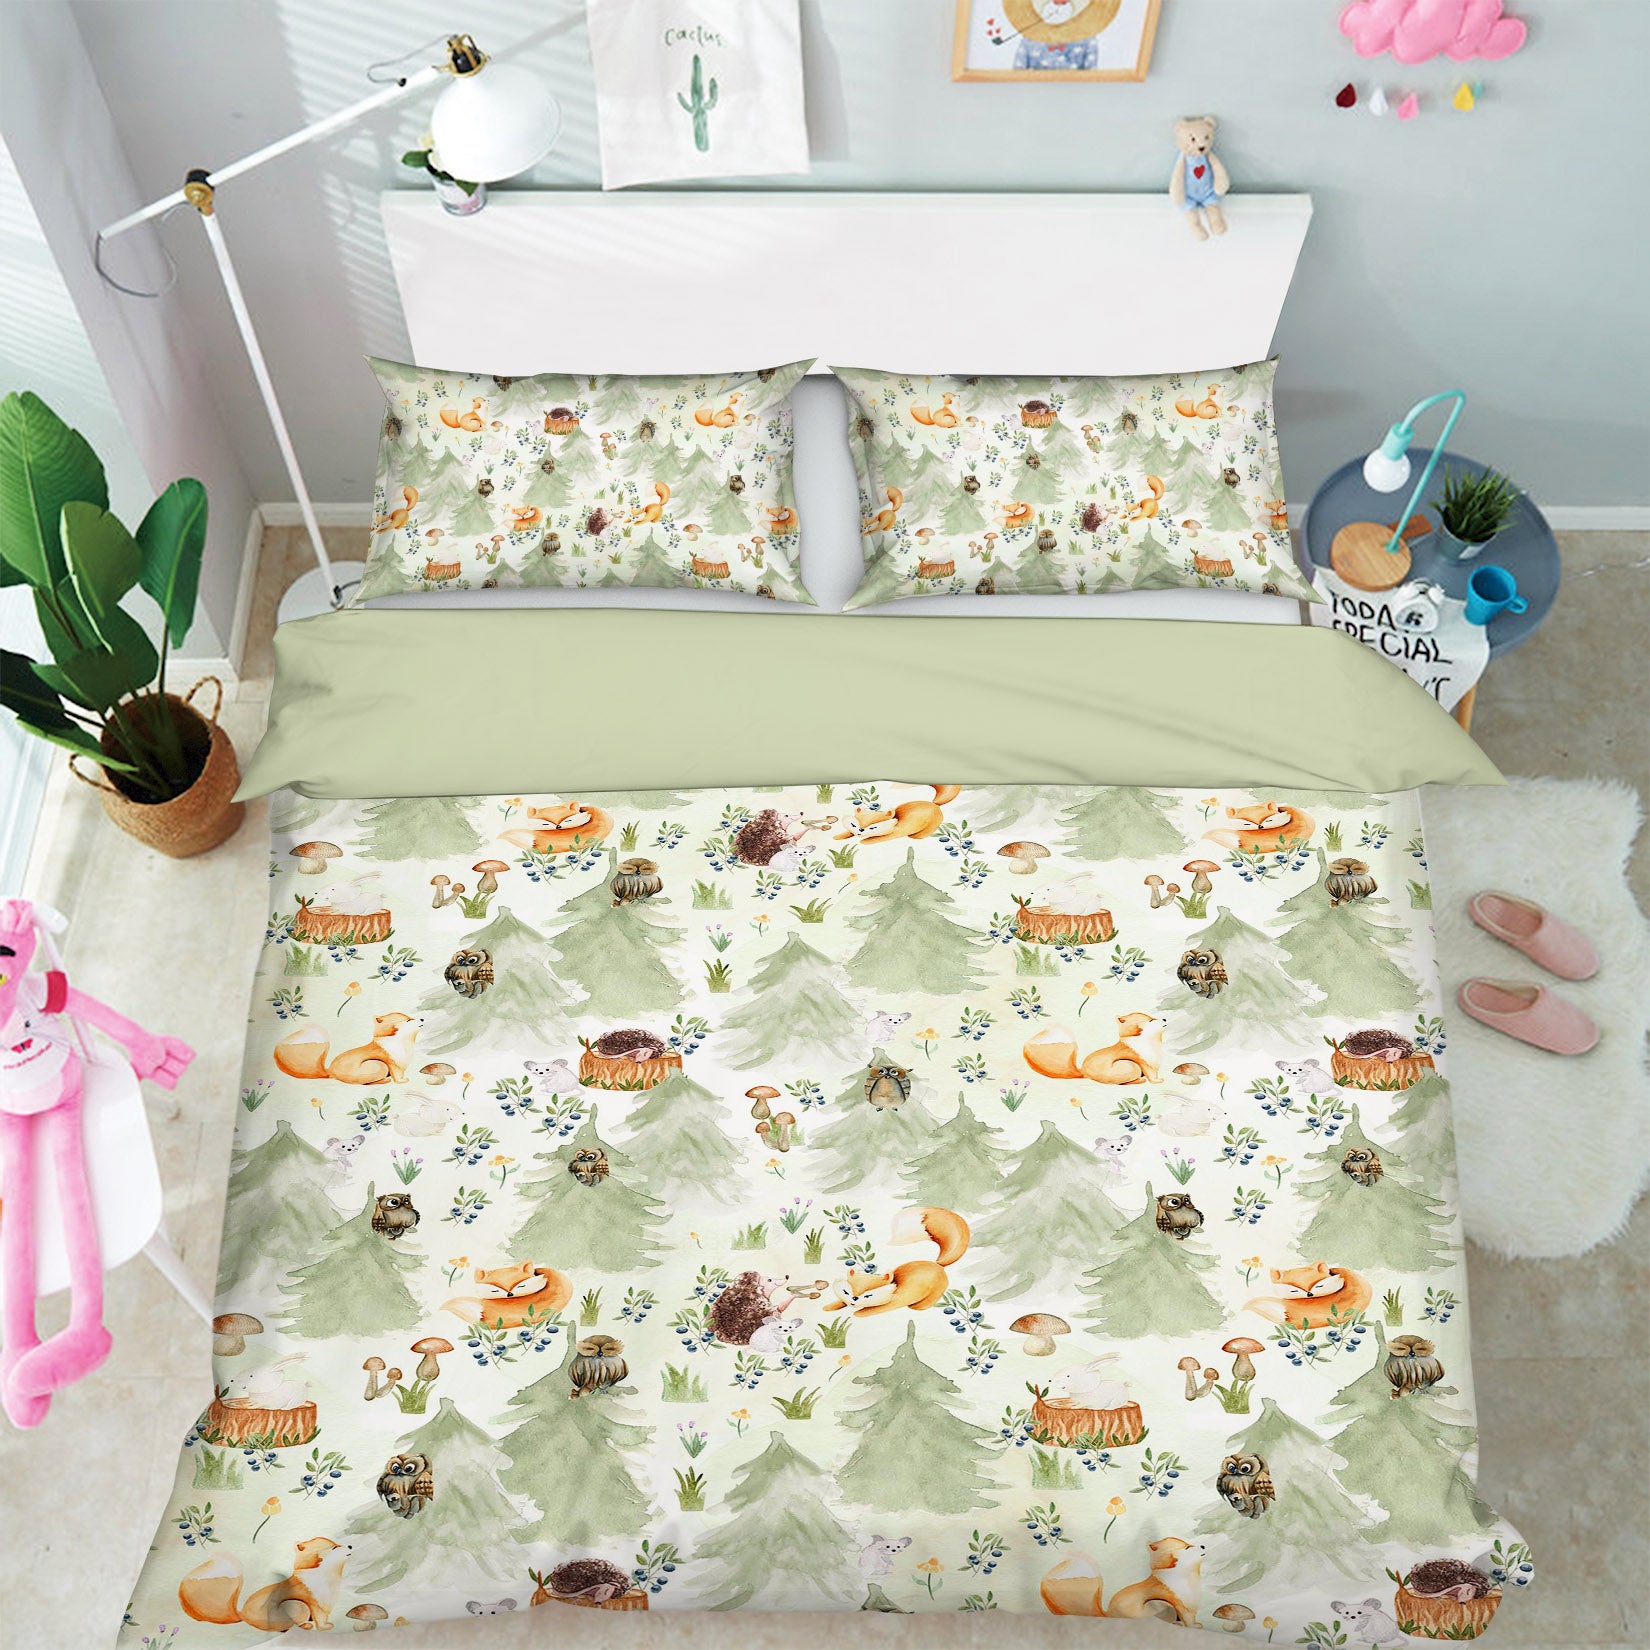 3D Mushroom Fox 194 Uta Naumann Bedding Bed Pillowcases Quilt